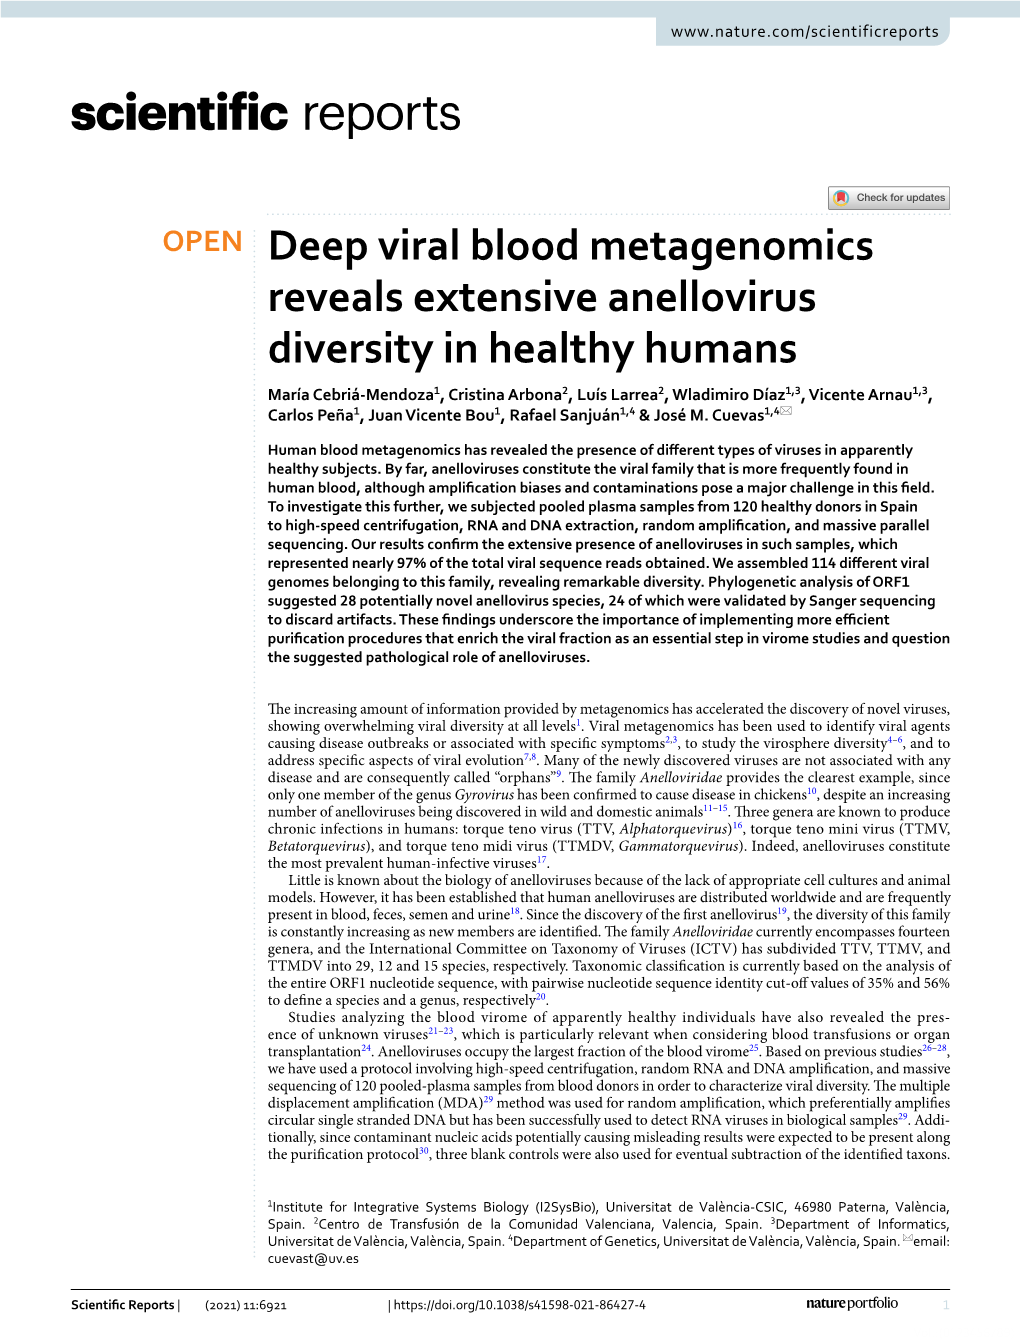 Deep Viral Blood Metagenomics Reveals Extensive Anellovirus